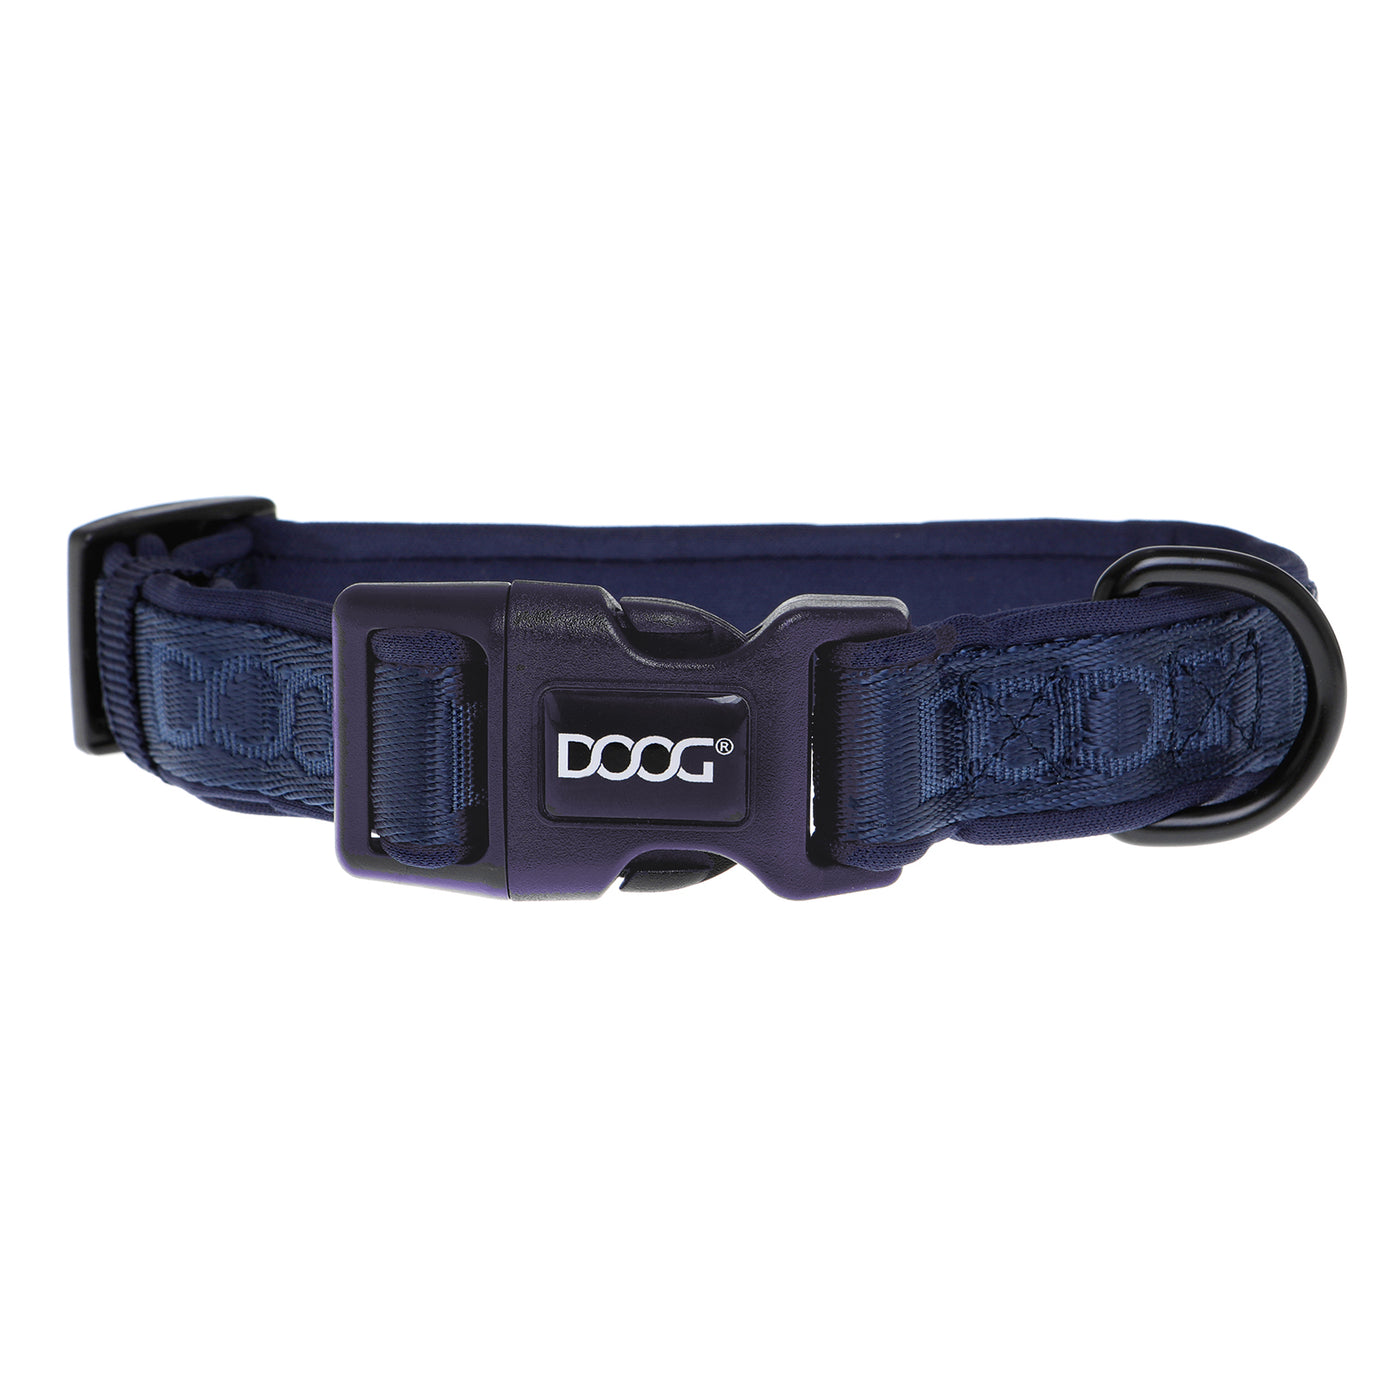 Neosport Neoprene Dog Collar - Navy Blue